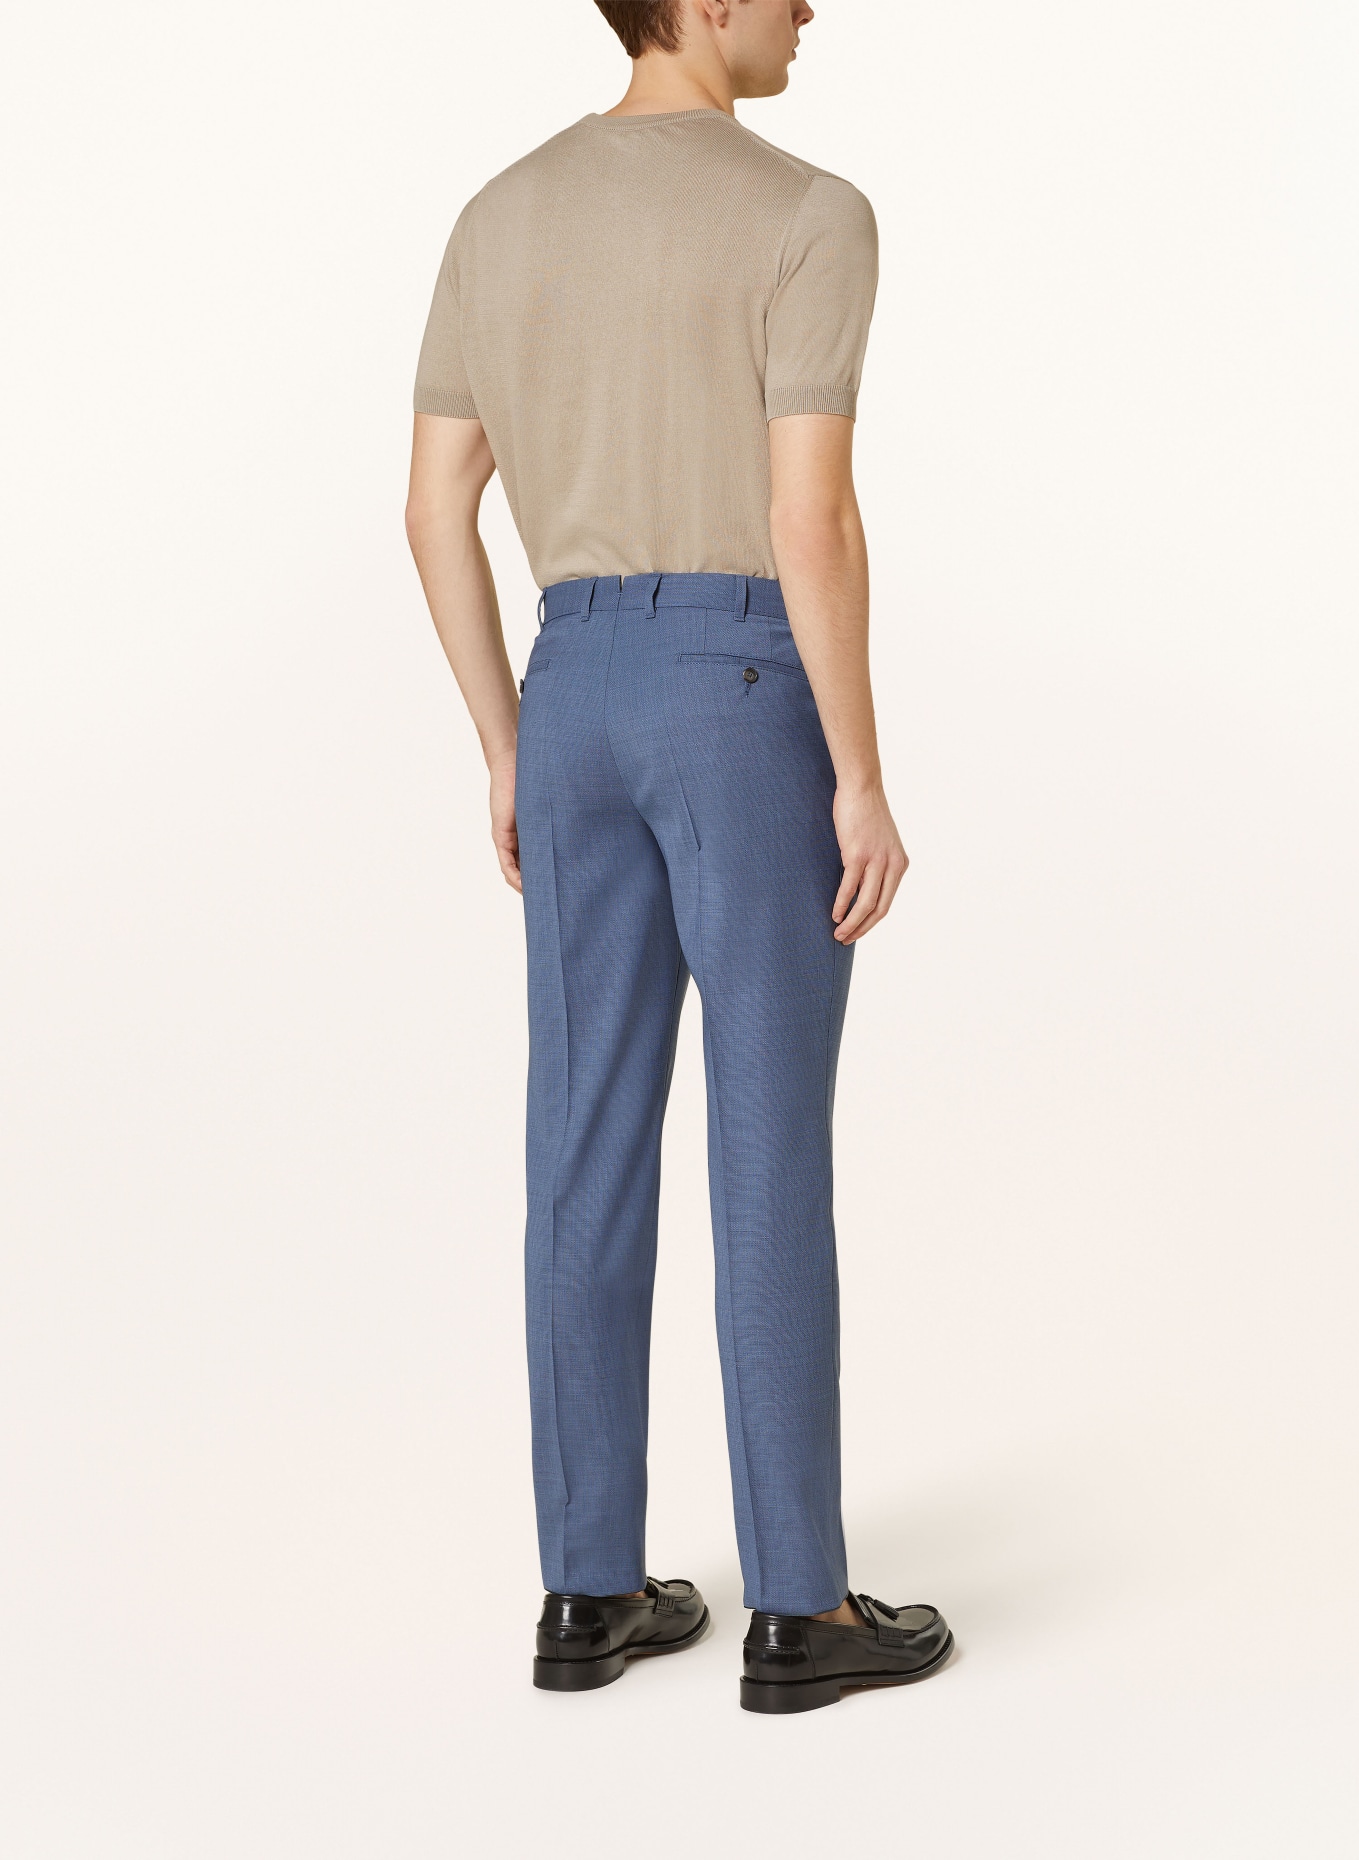 EDUARD DRESSLER Anzughose Slim Fit, Farbe: 036 hellblau (Bild 4)